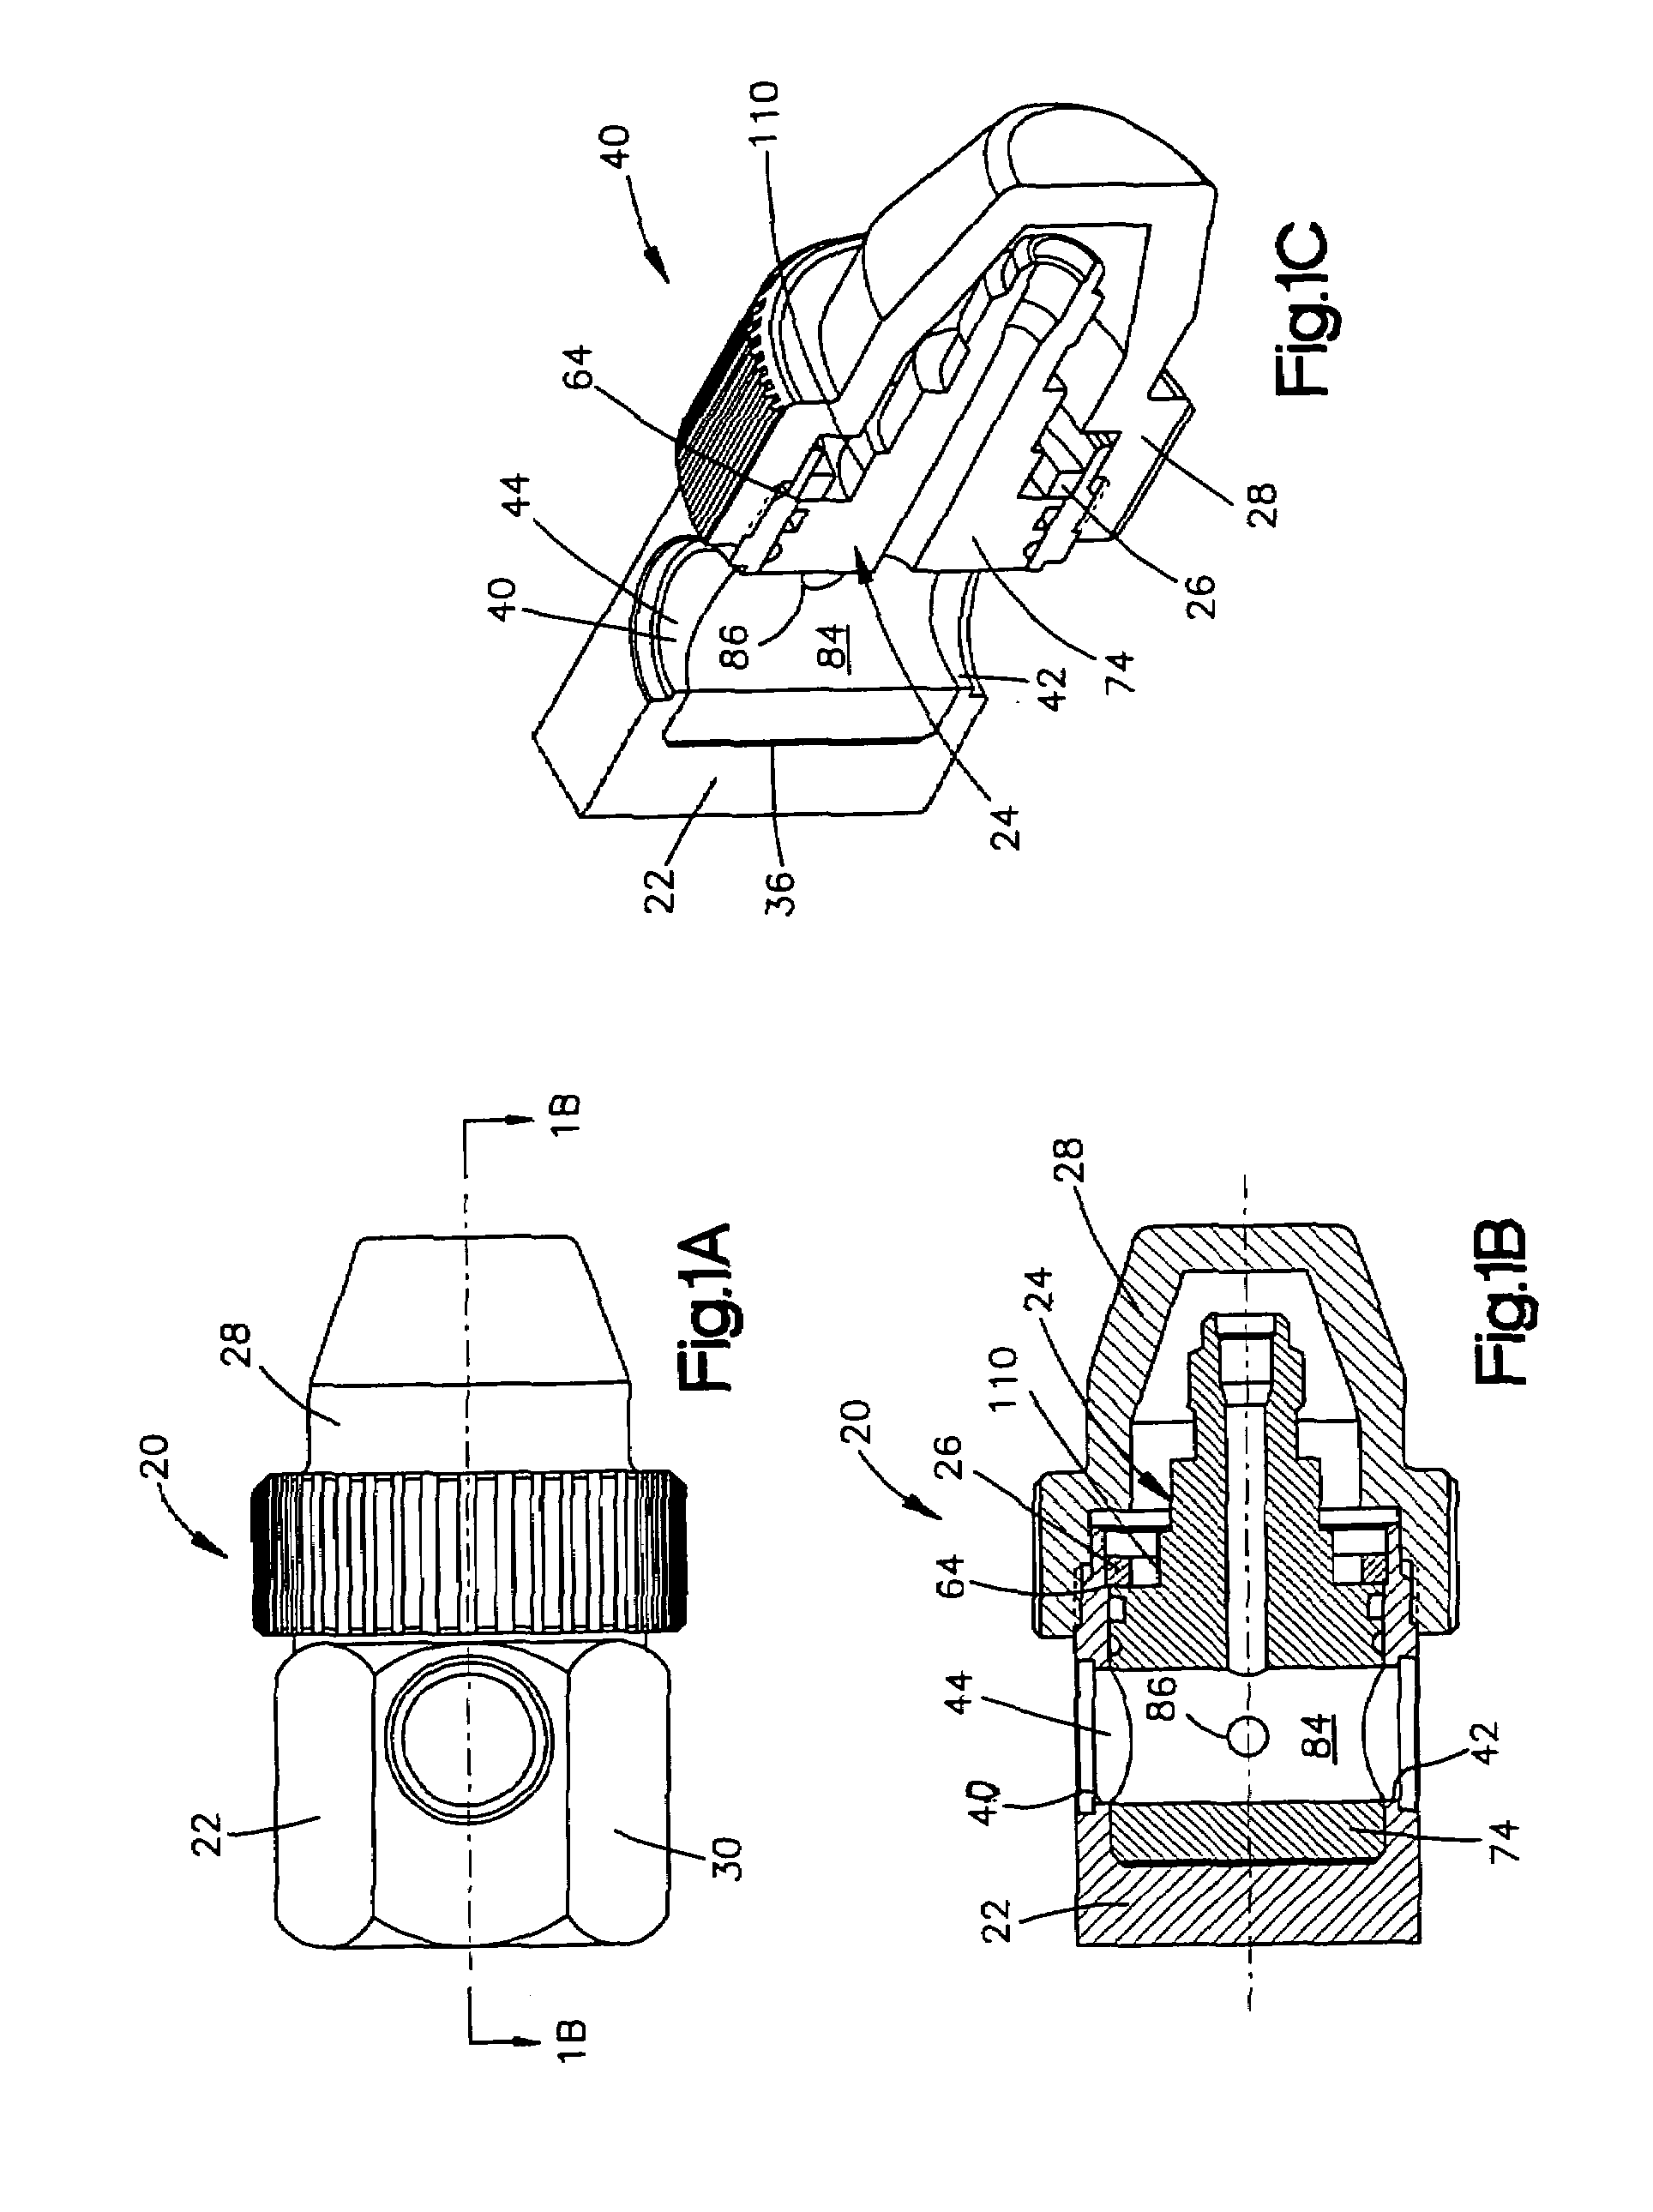 Plug-style air-conditioning service valve